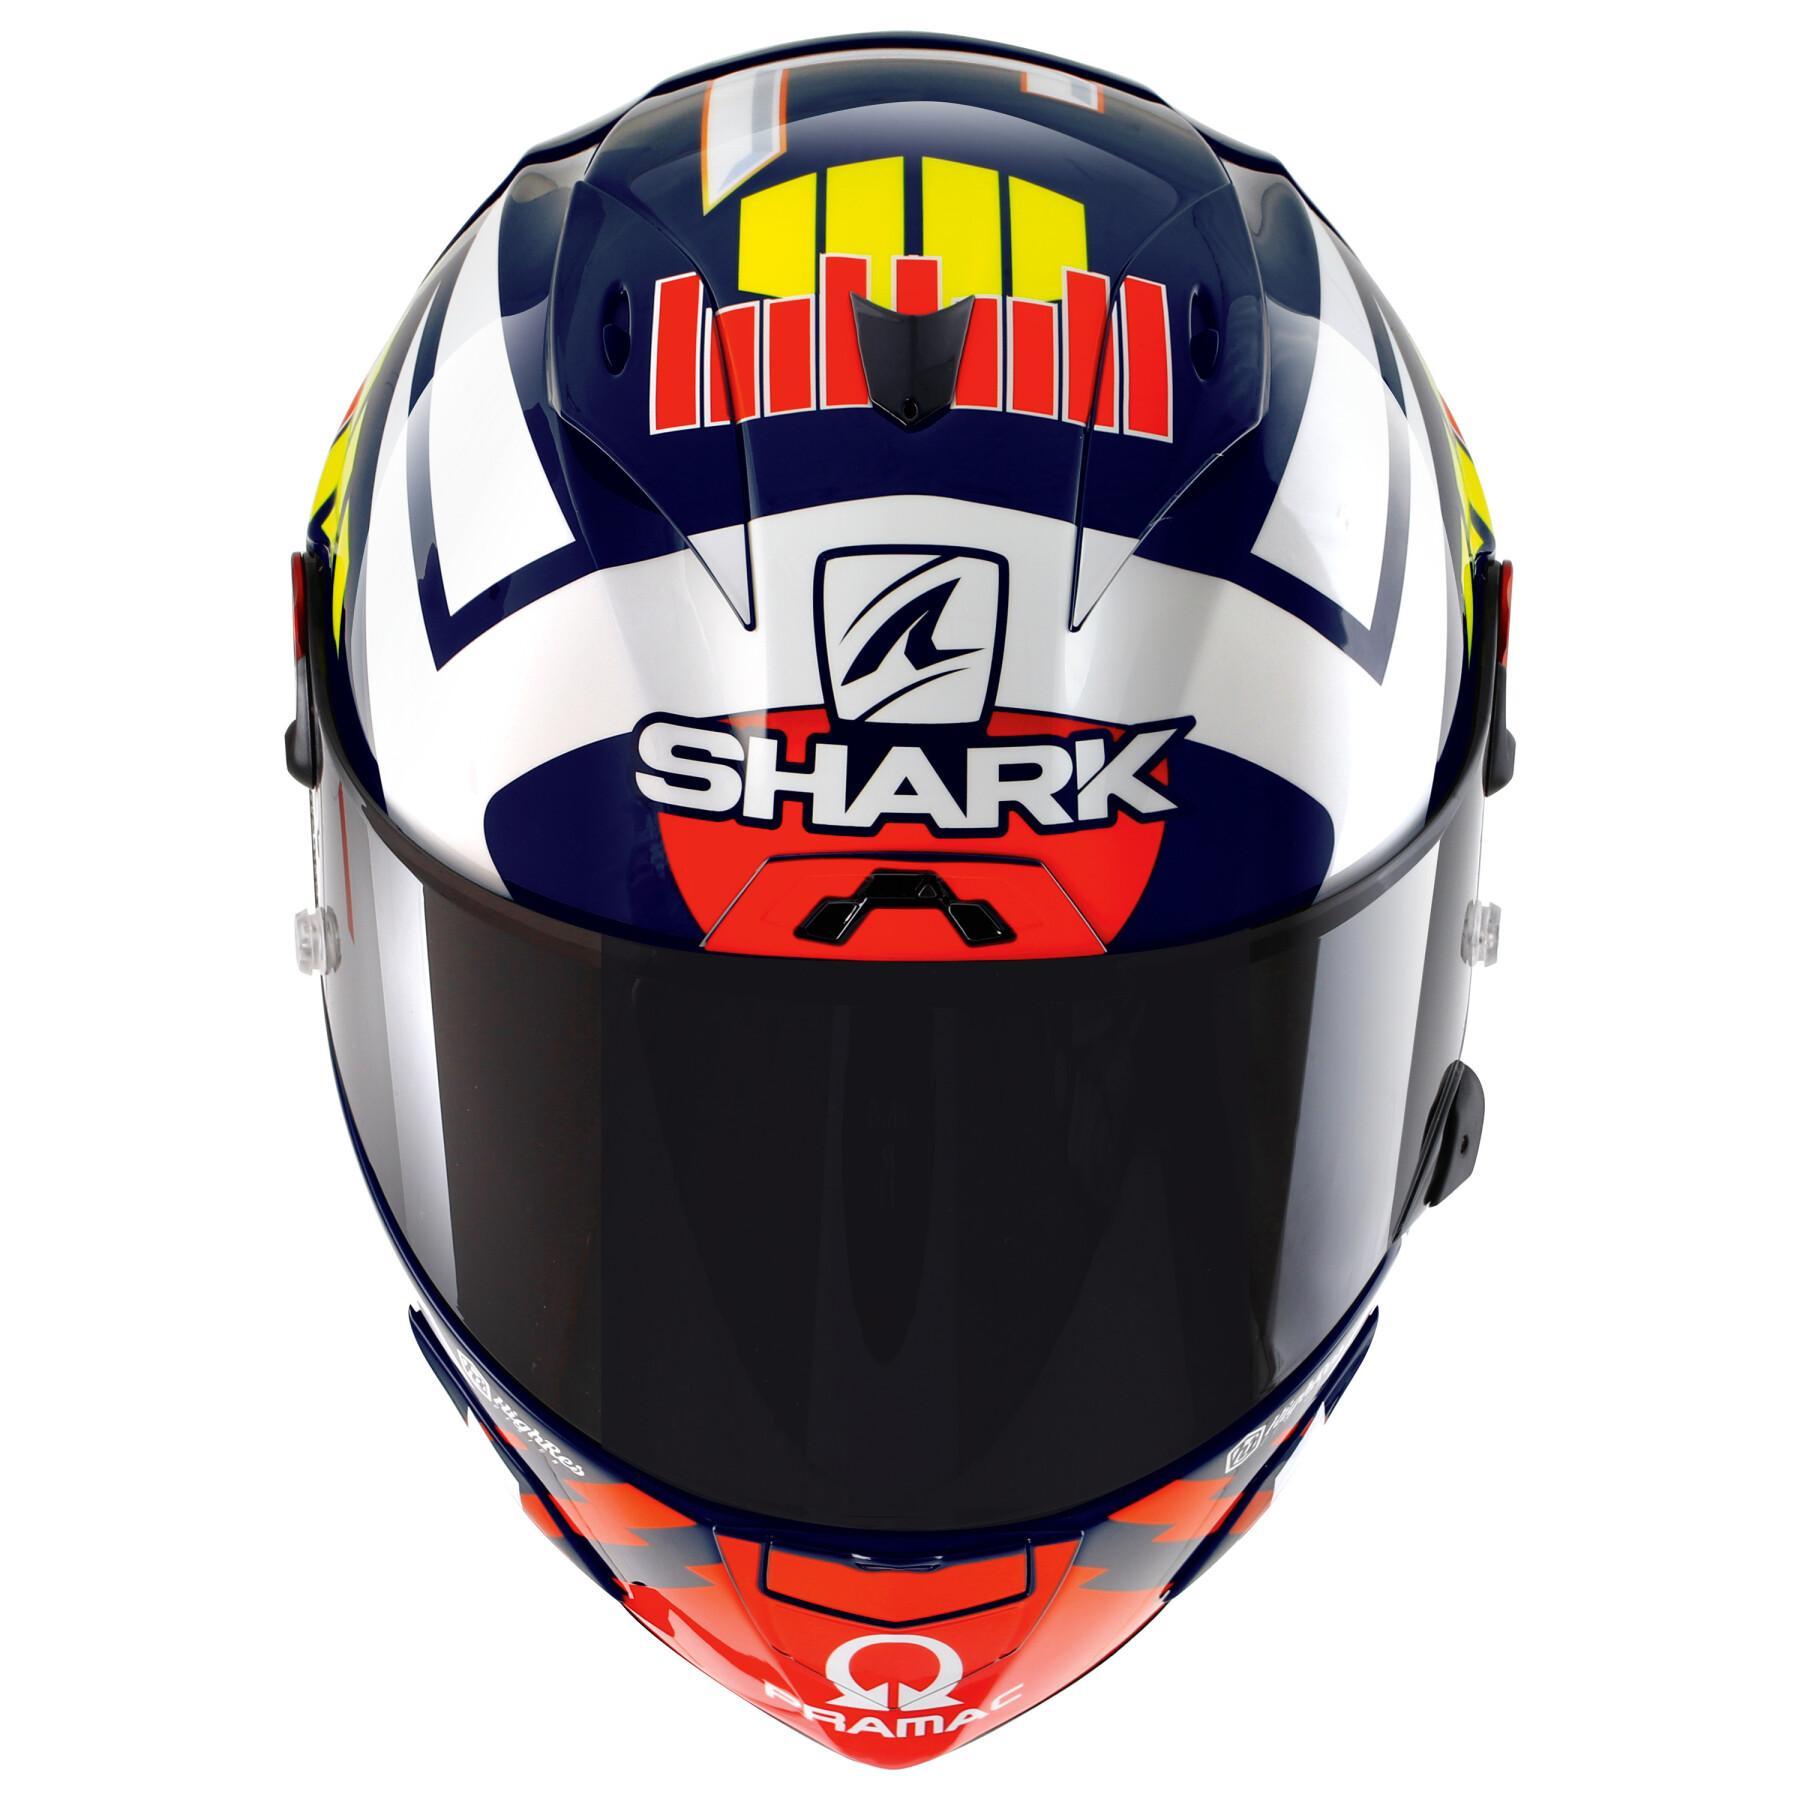 Motorrad-Integralhelm Shark race-r pro GP zarco signature